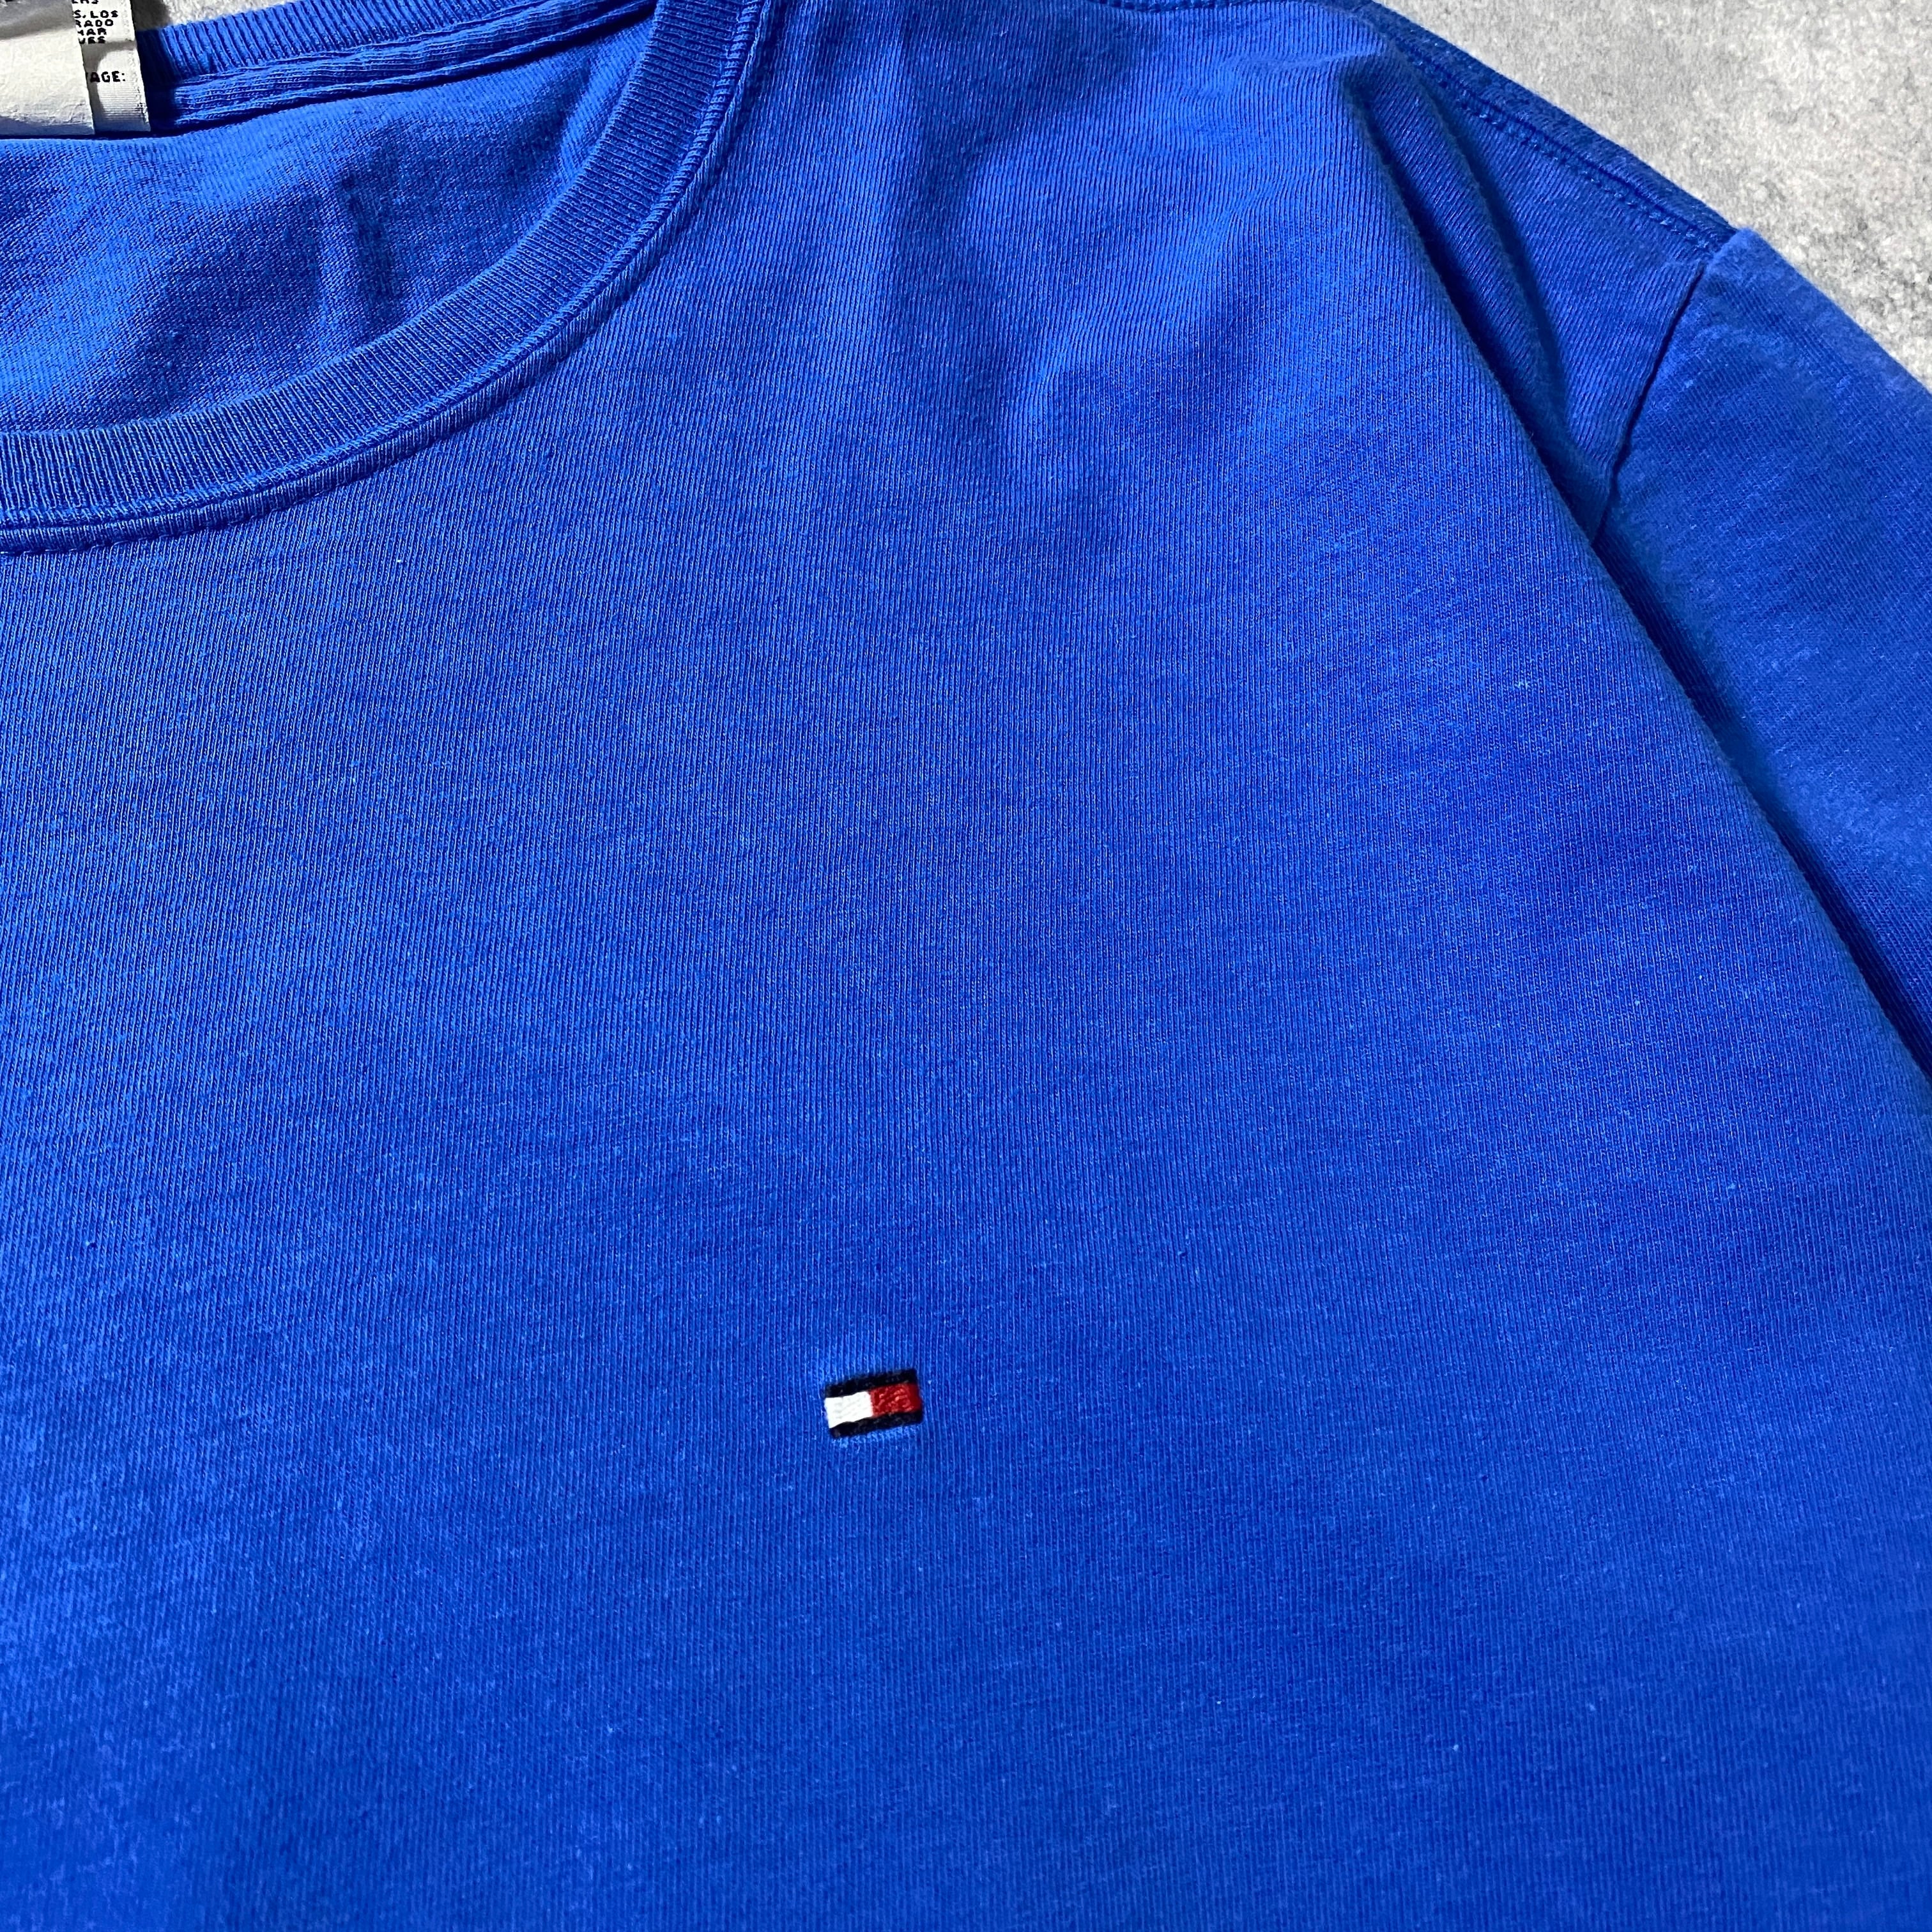 90's トミーヒルフィガー 刺繍ワンポイントロゴ ブルー Tシャツ